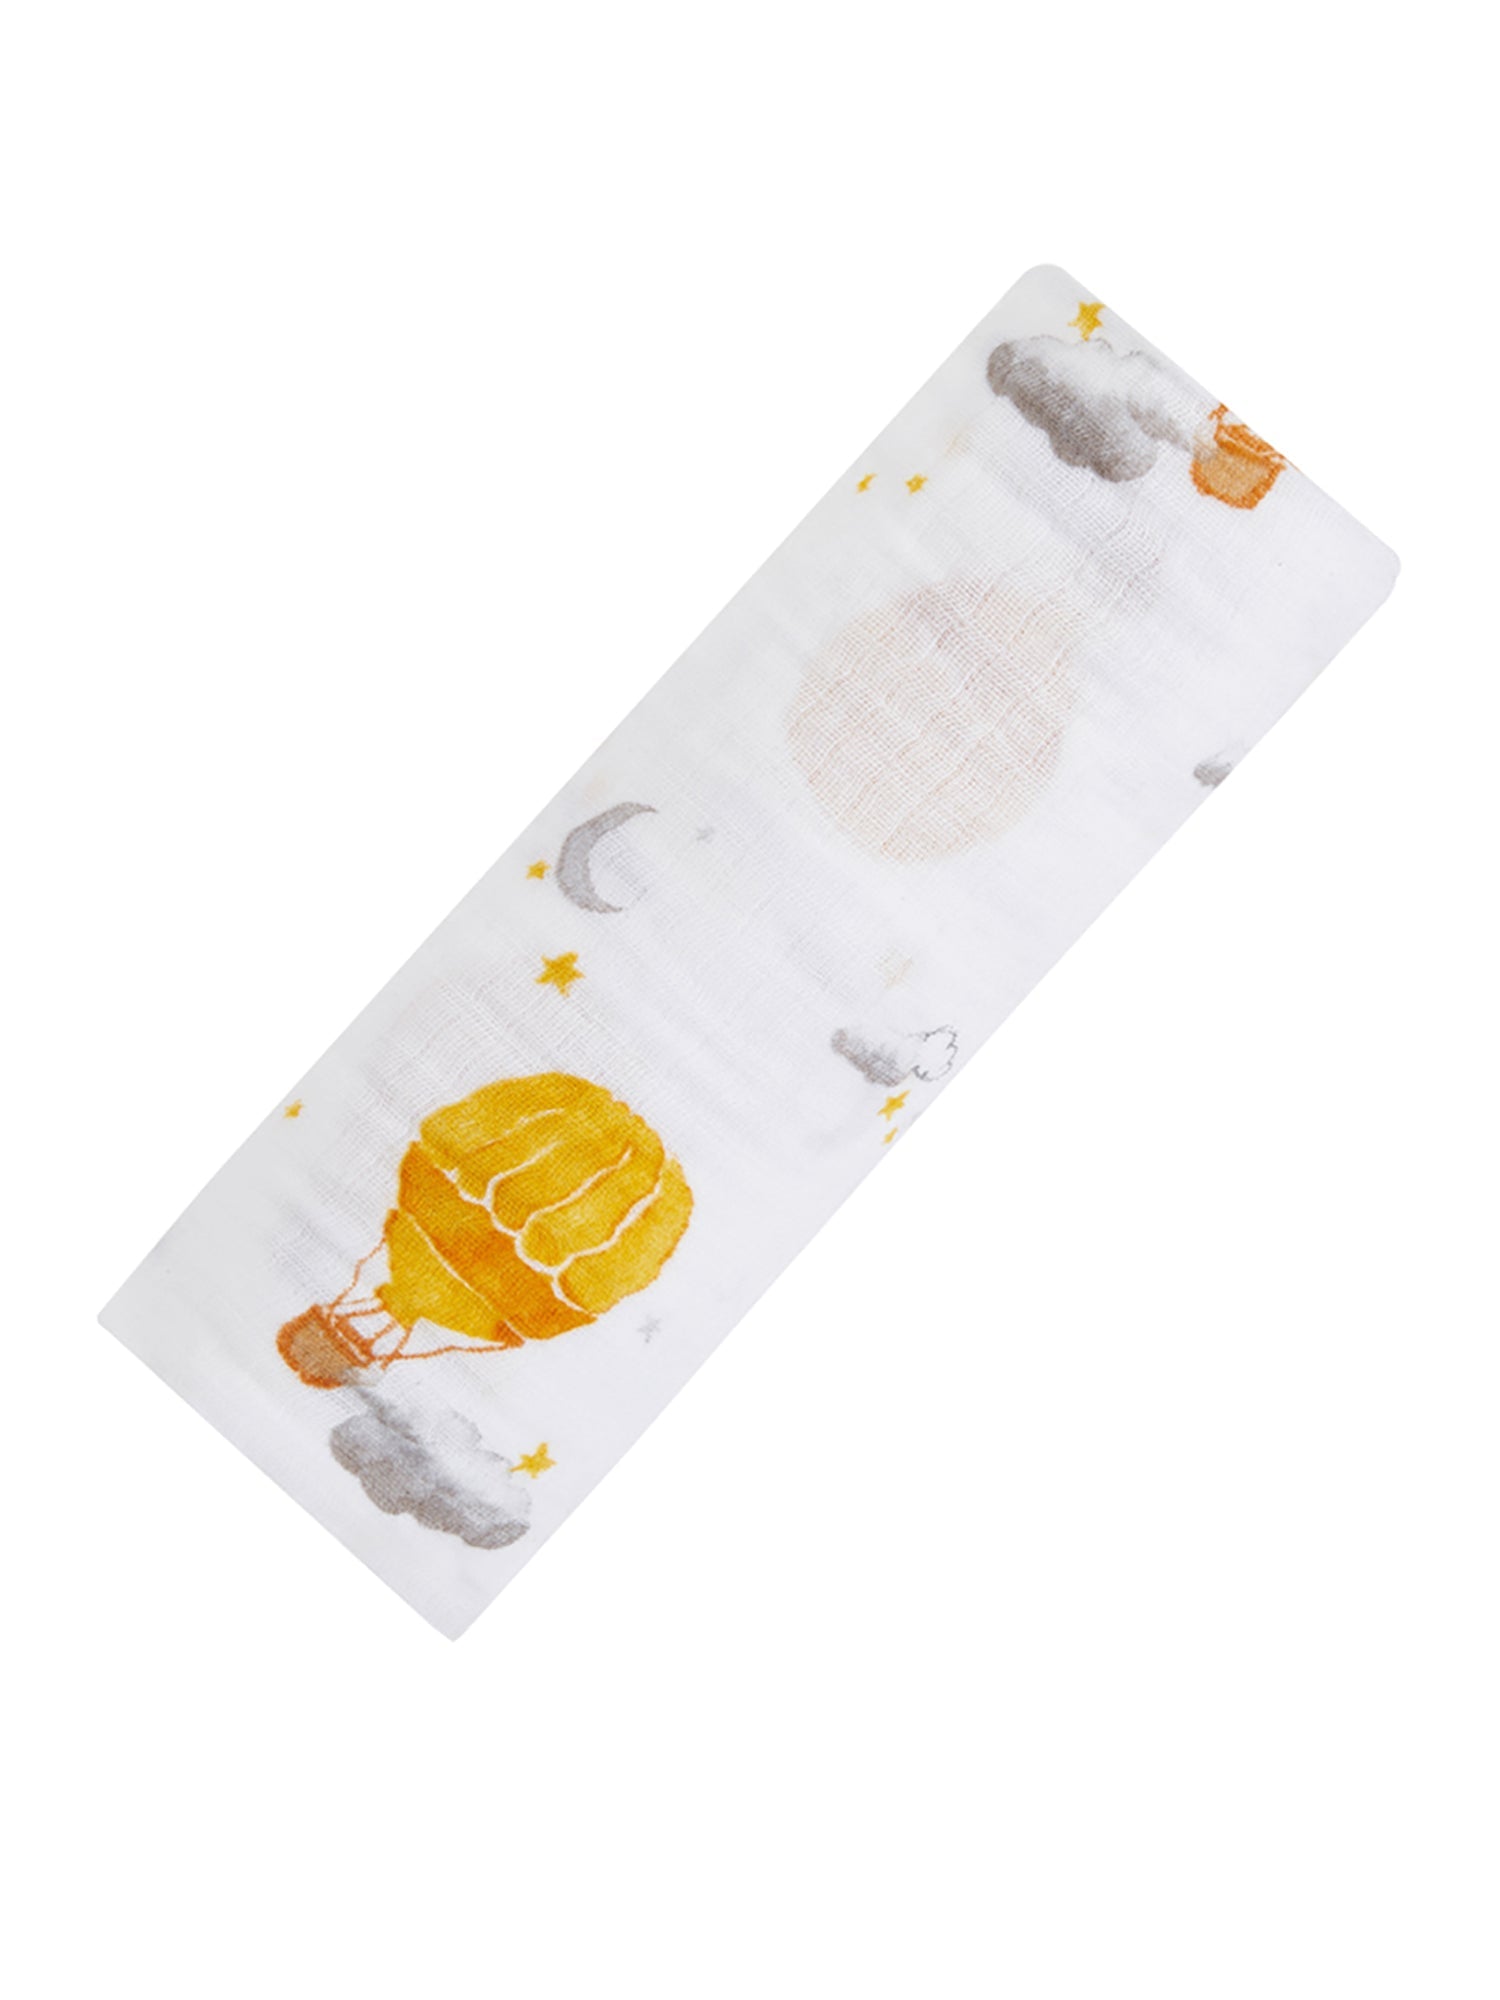 New Baby Gift Set - Yellow Mustard and Grey-5